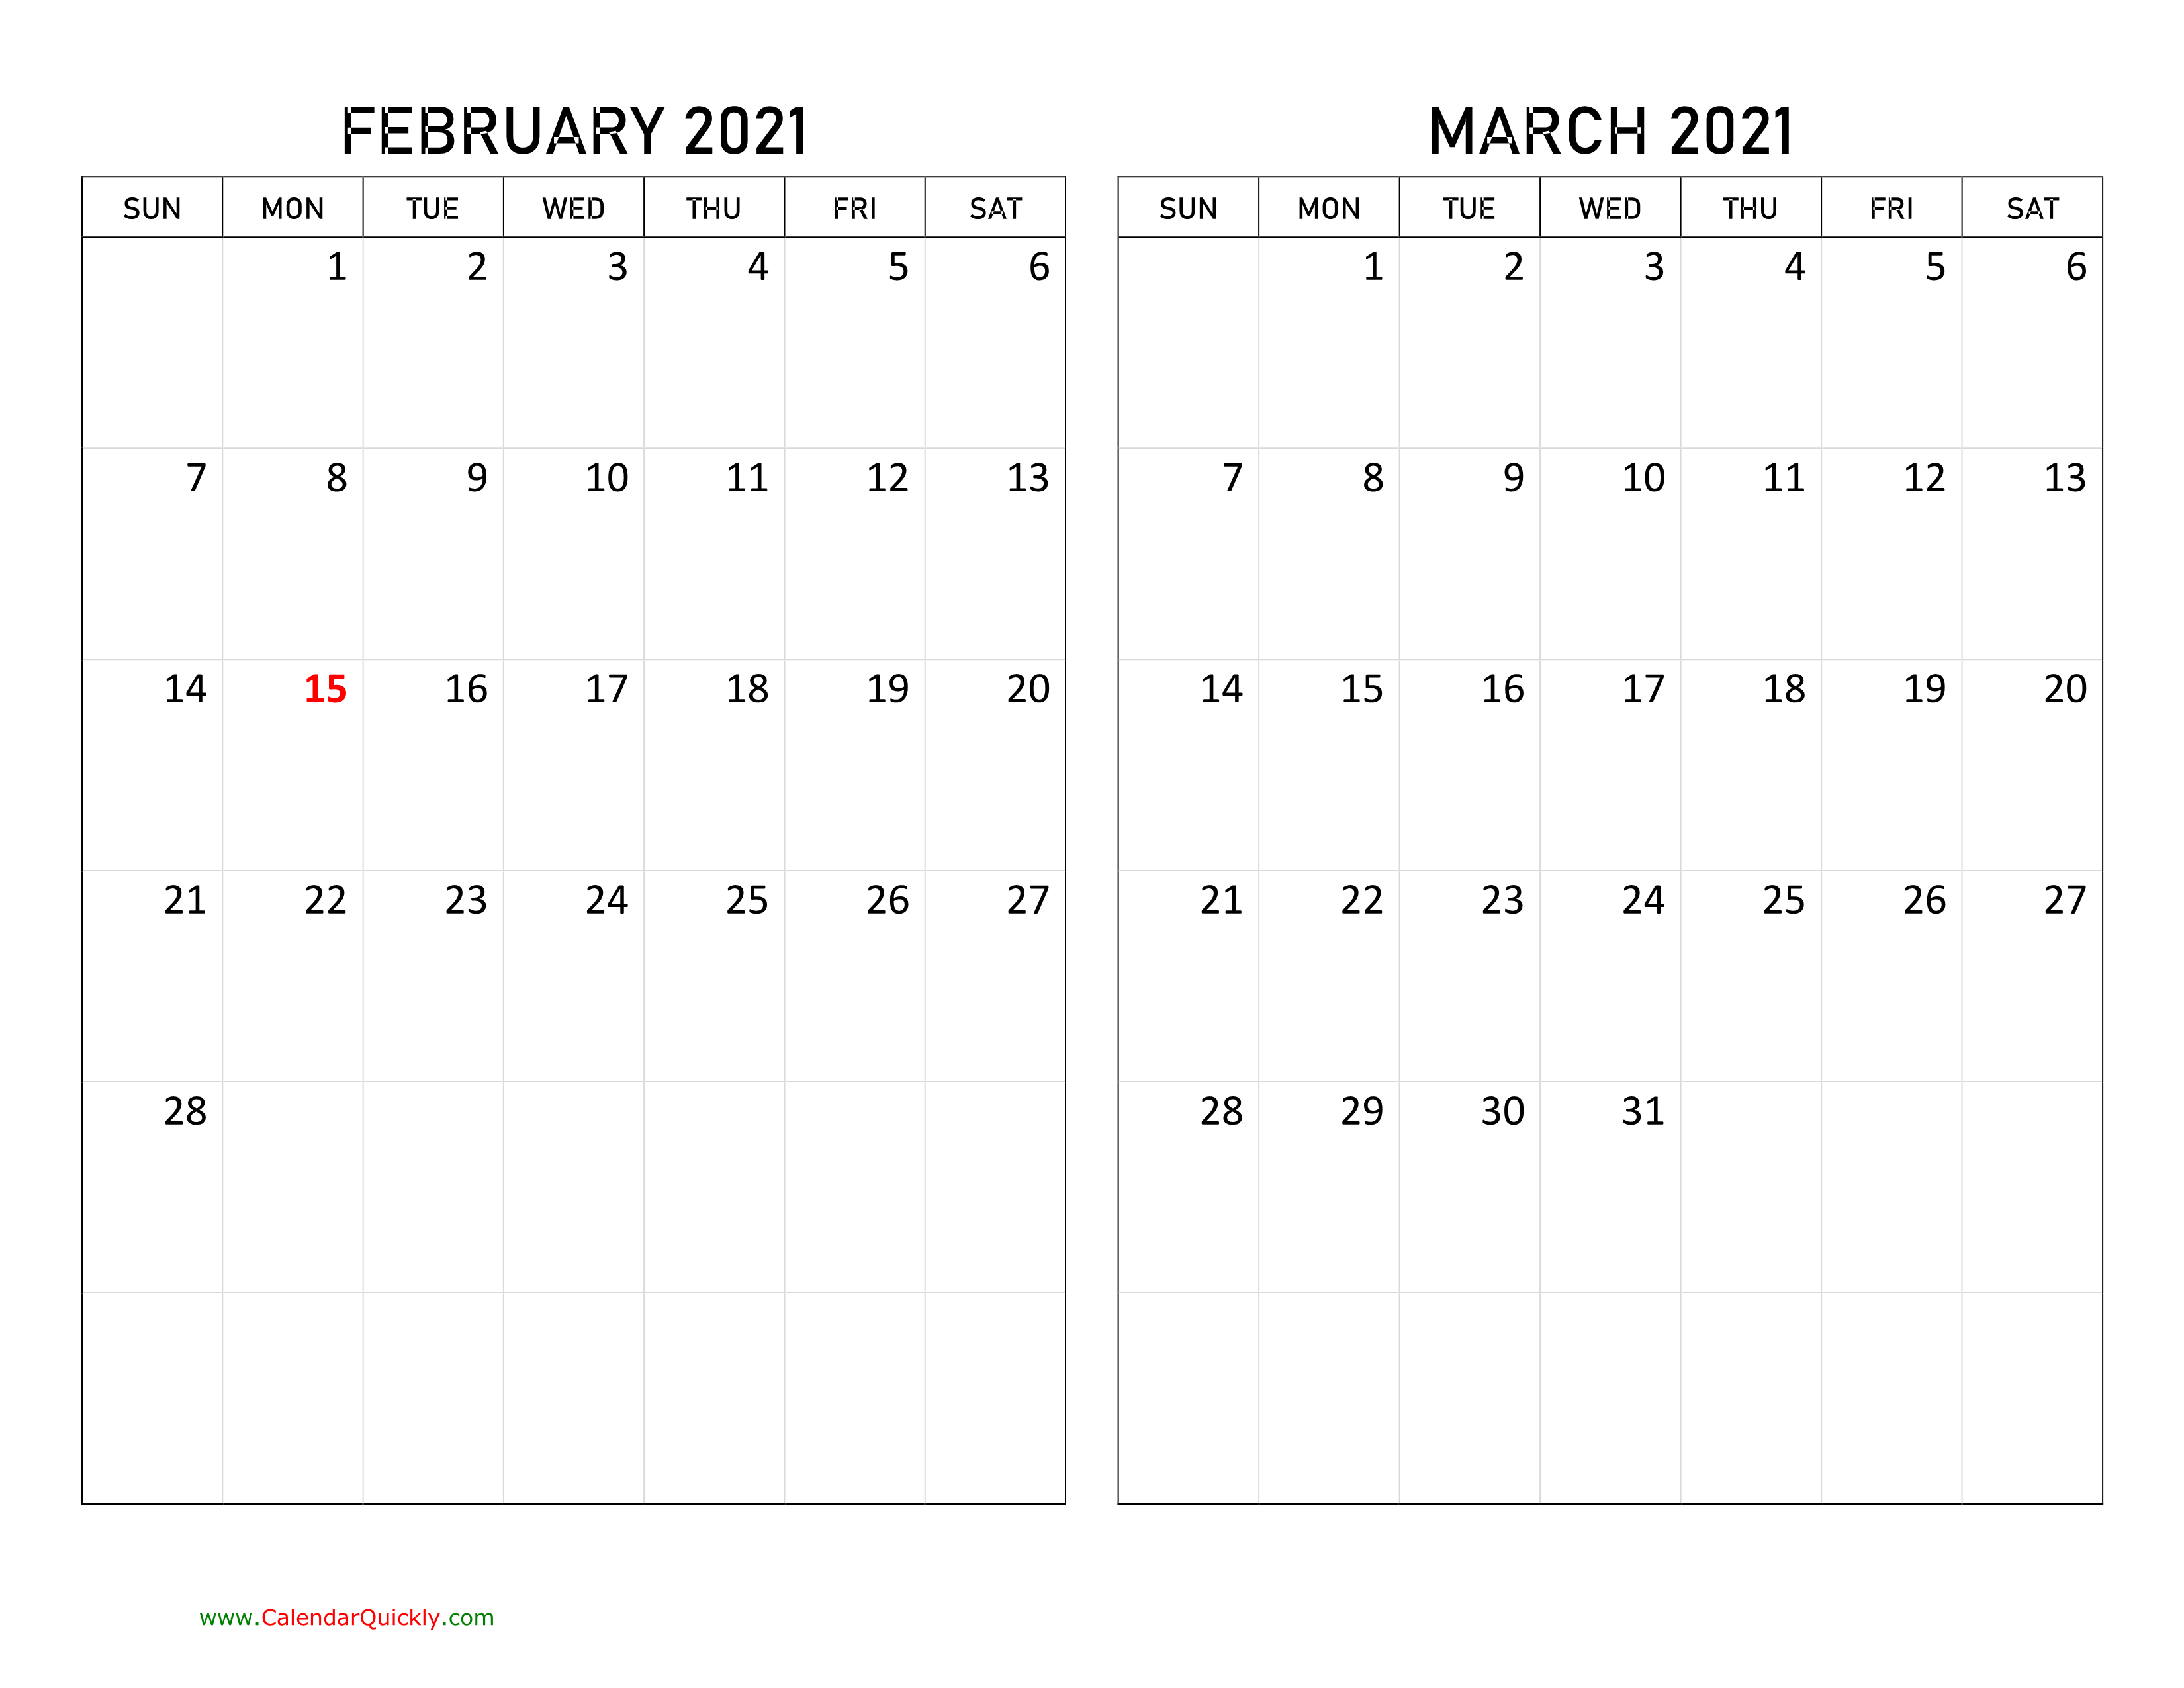 February and March 2021 Calendar Calendar Quickly